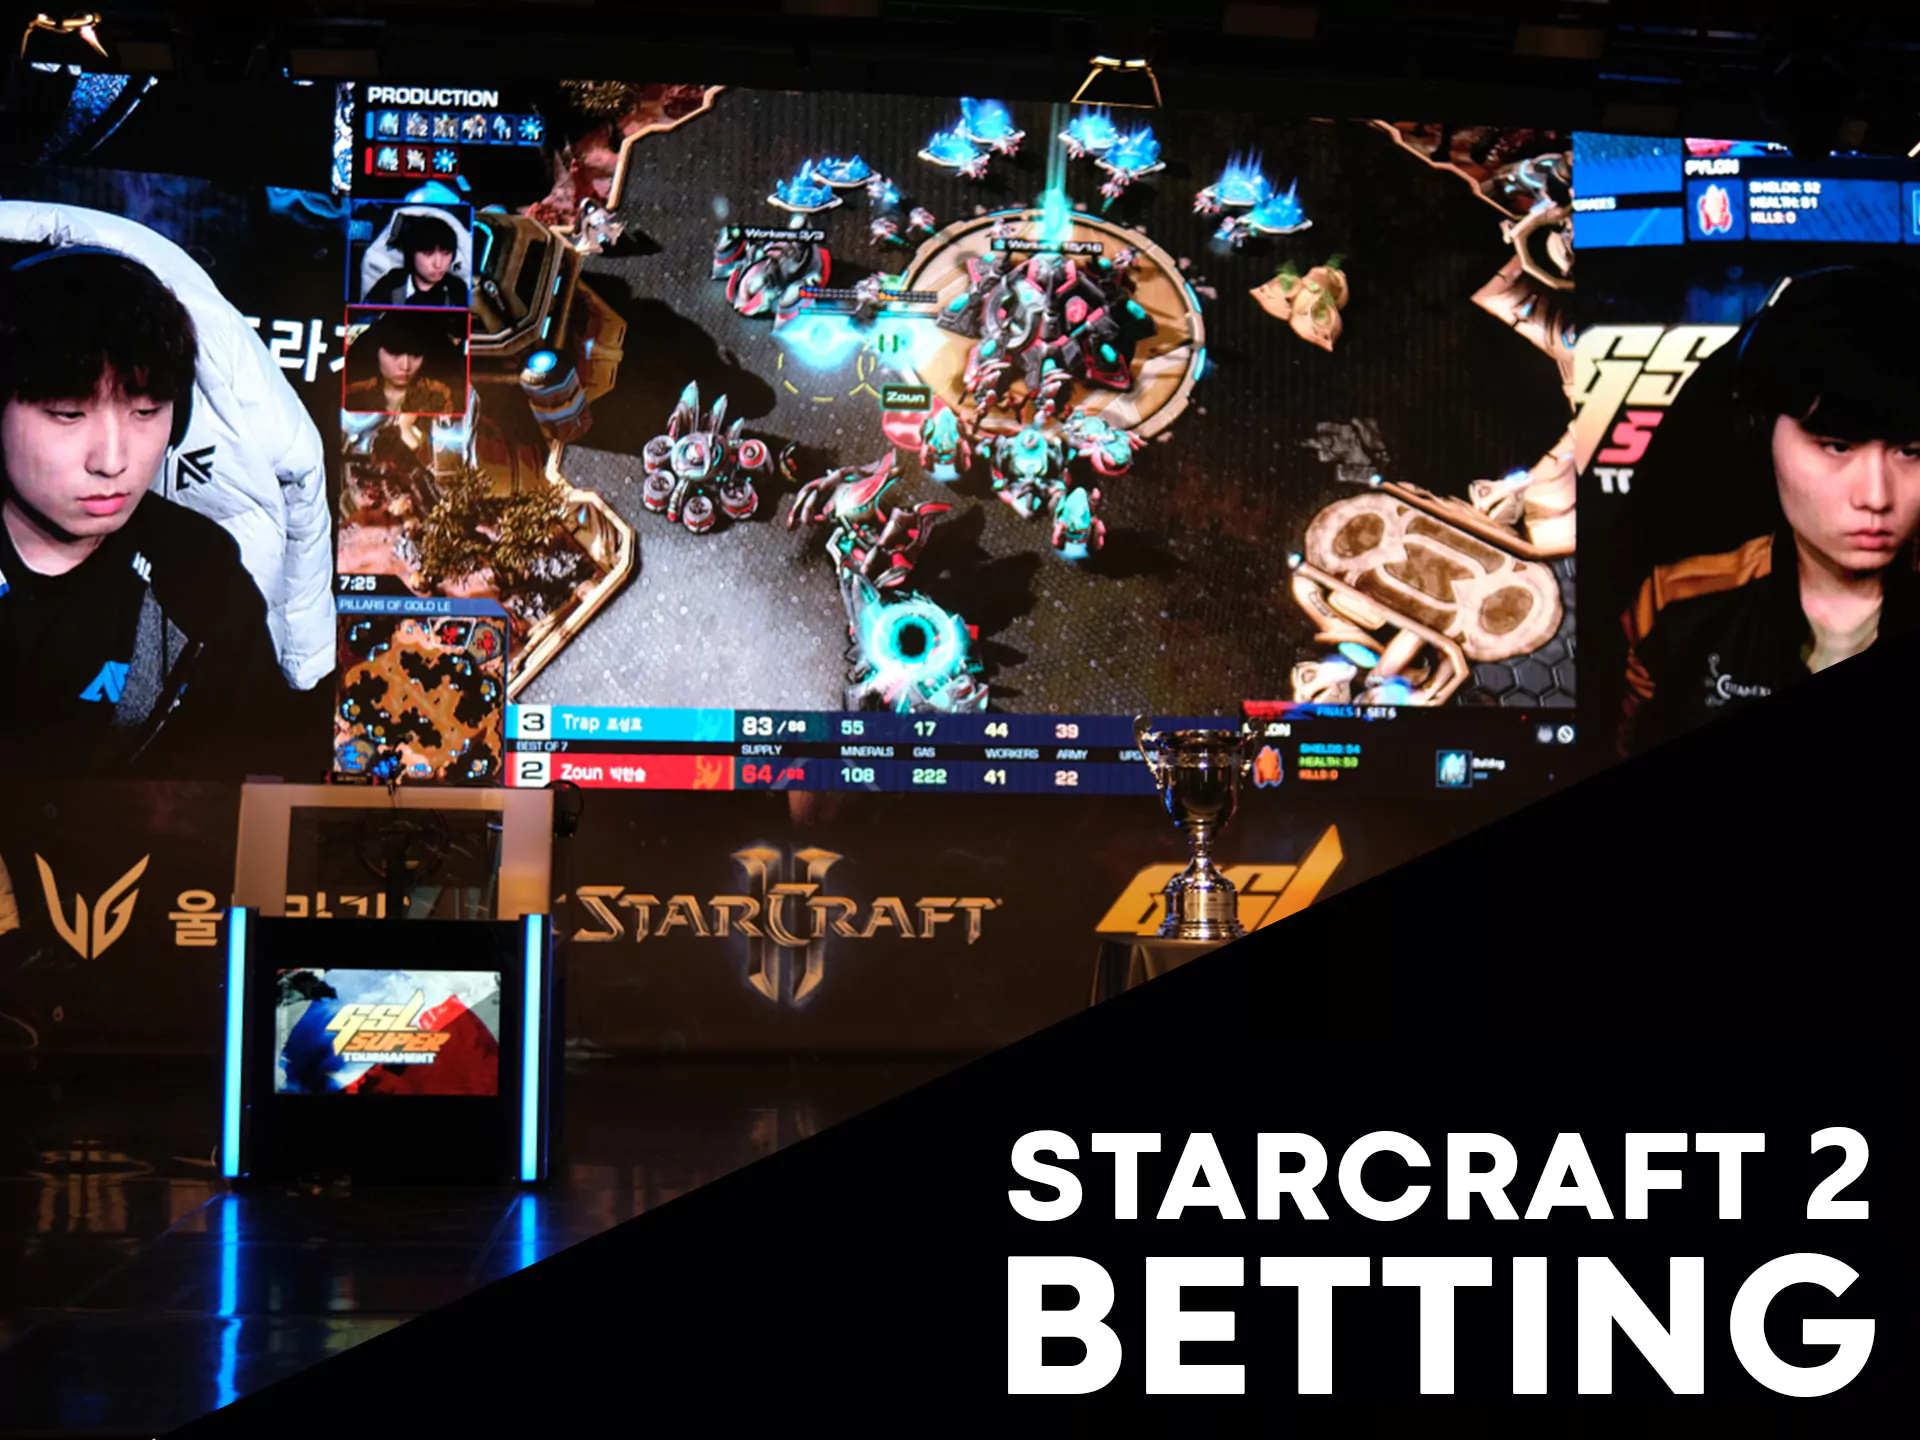 Starcraft 2 betting at Fairplay.